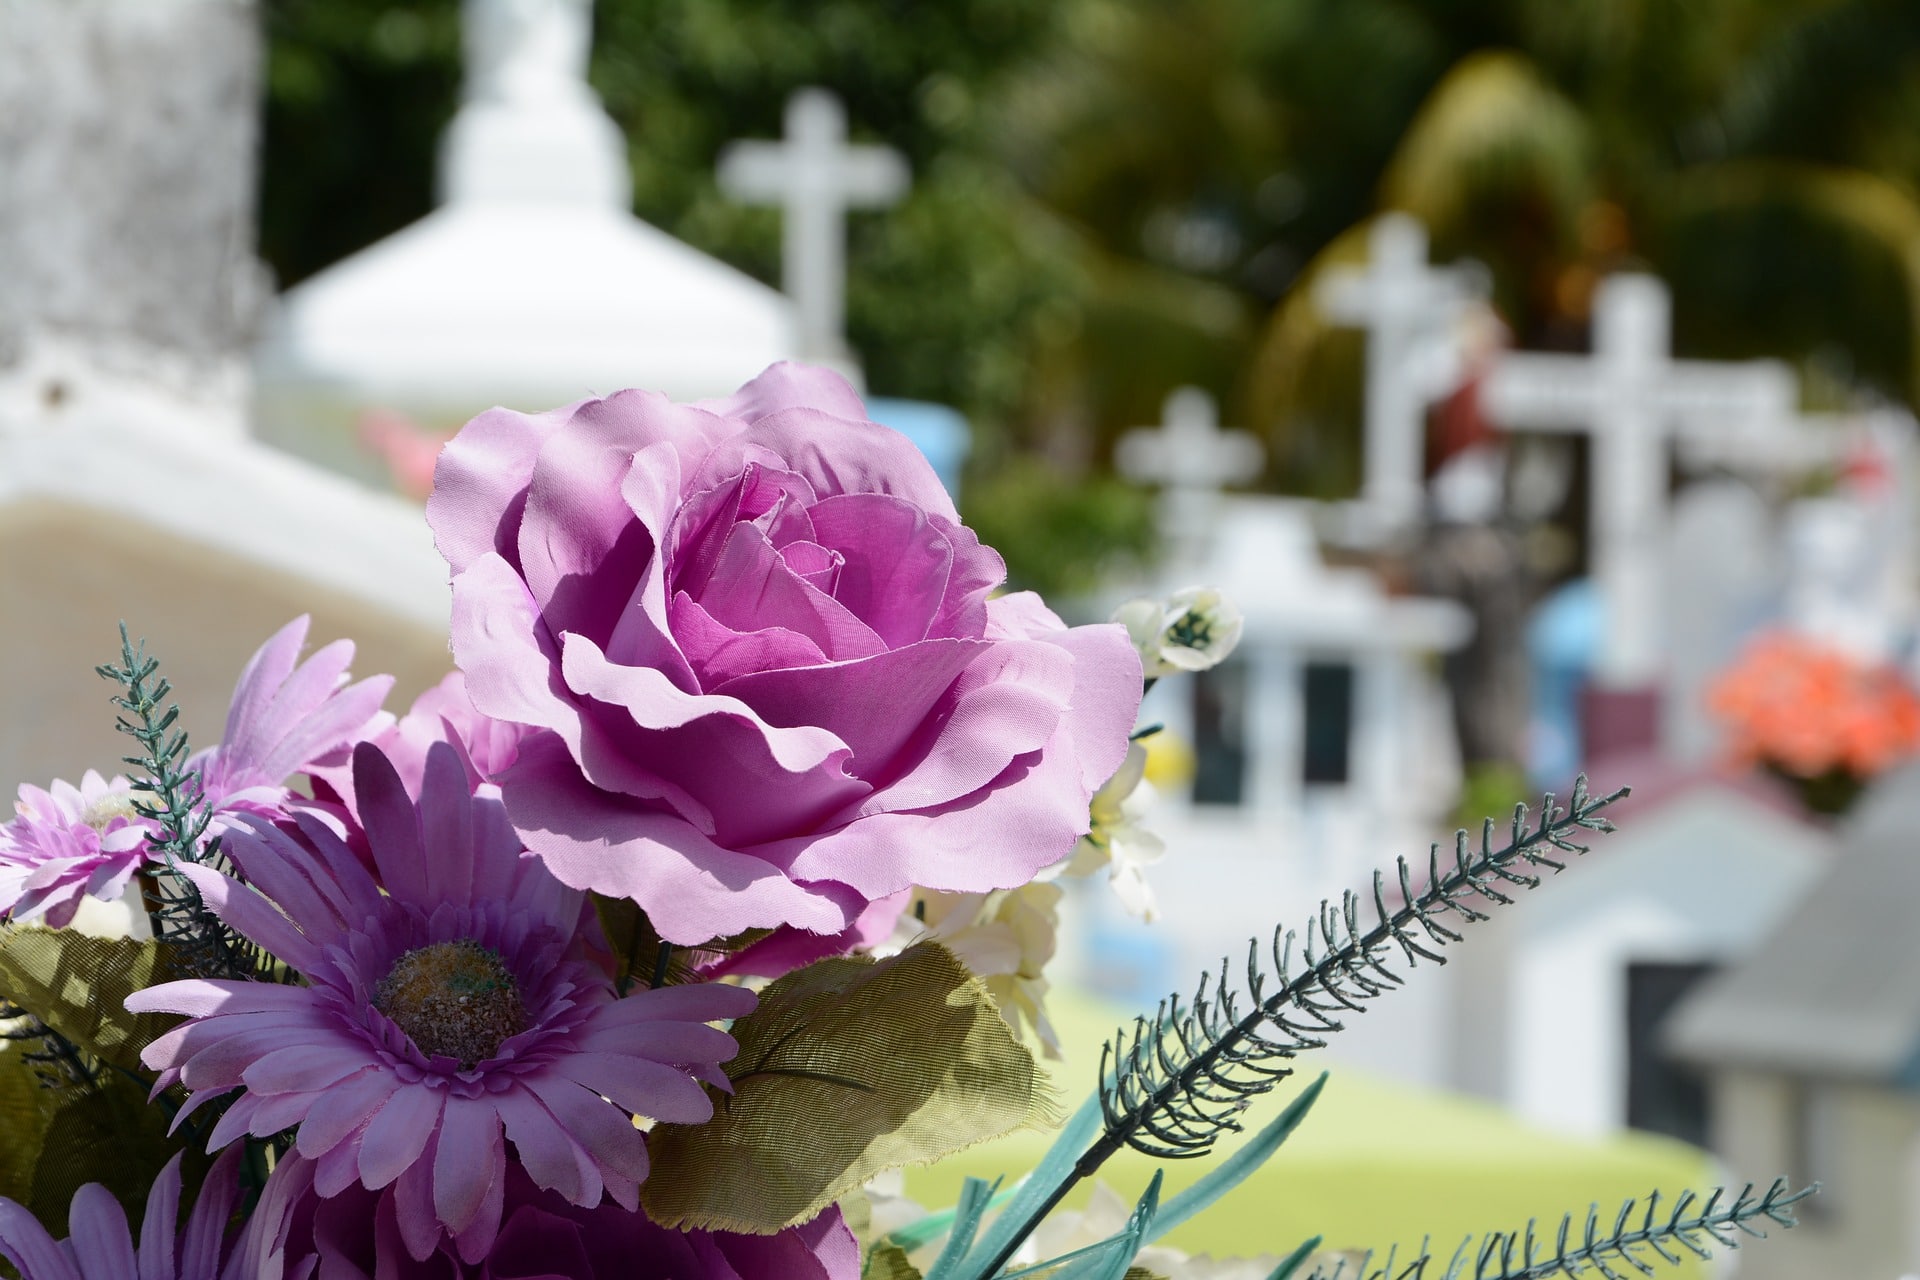 flowers in cemetery